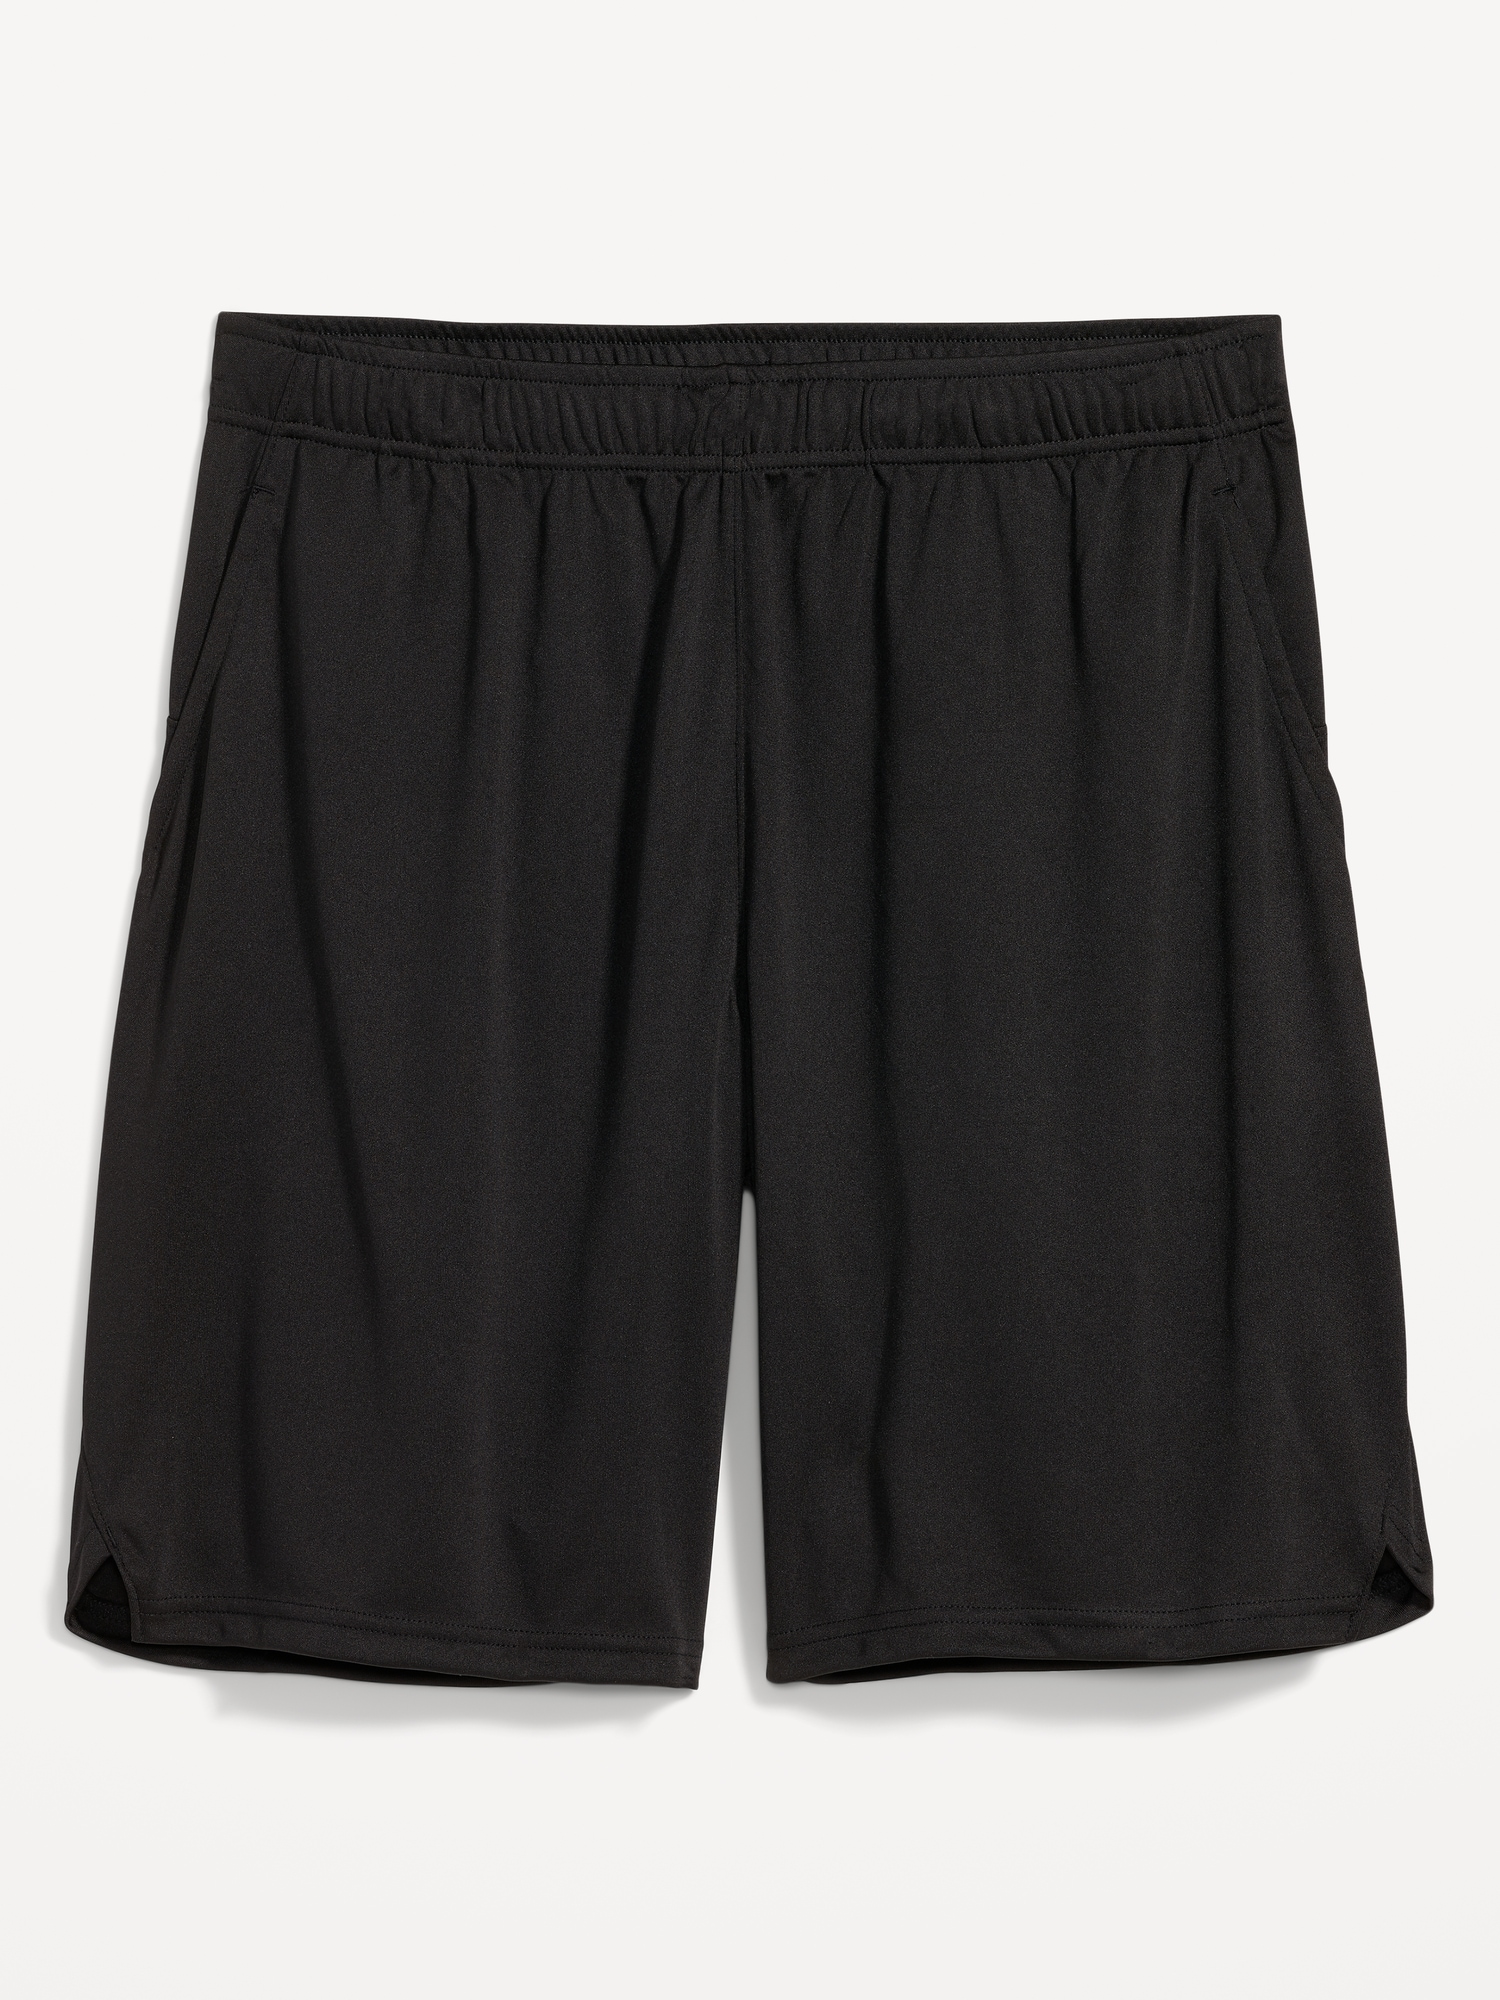 Go-Dry Mesh Basketball Shorts for Men -- 9-inch inseam | Old Navy